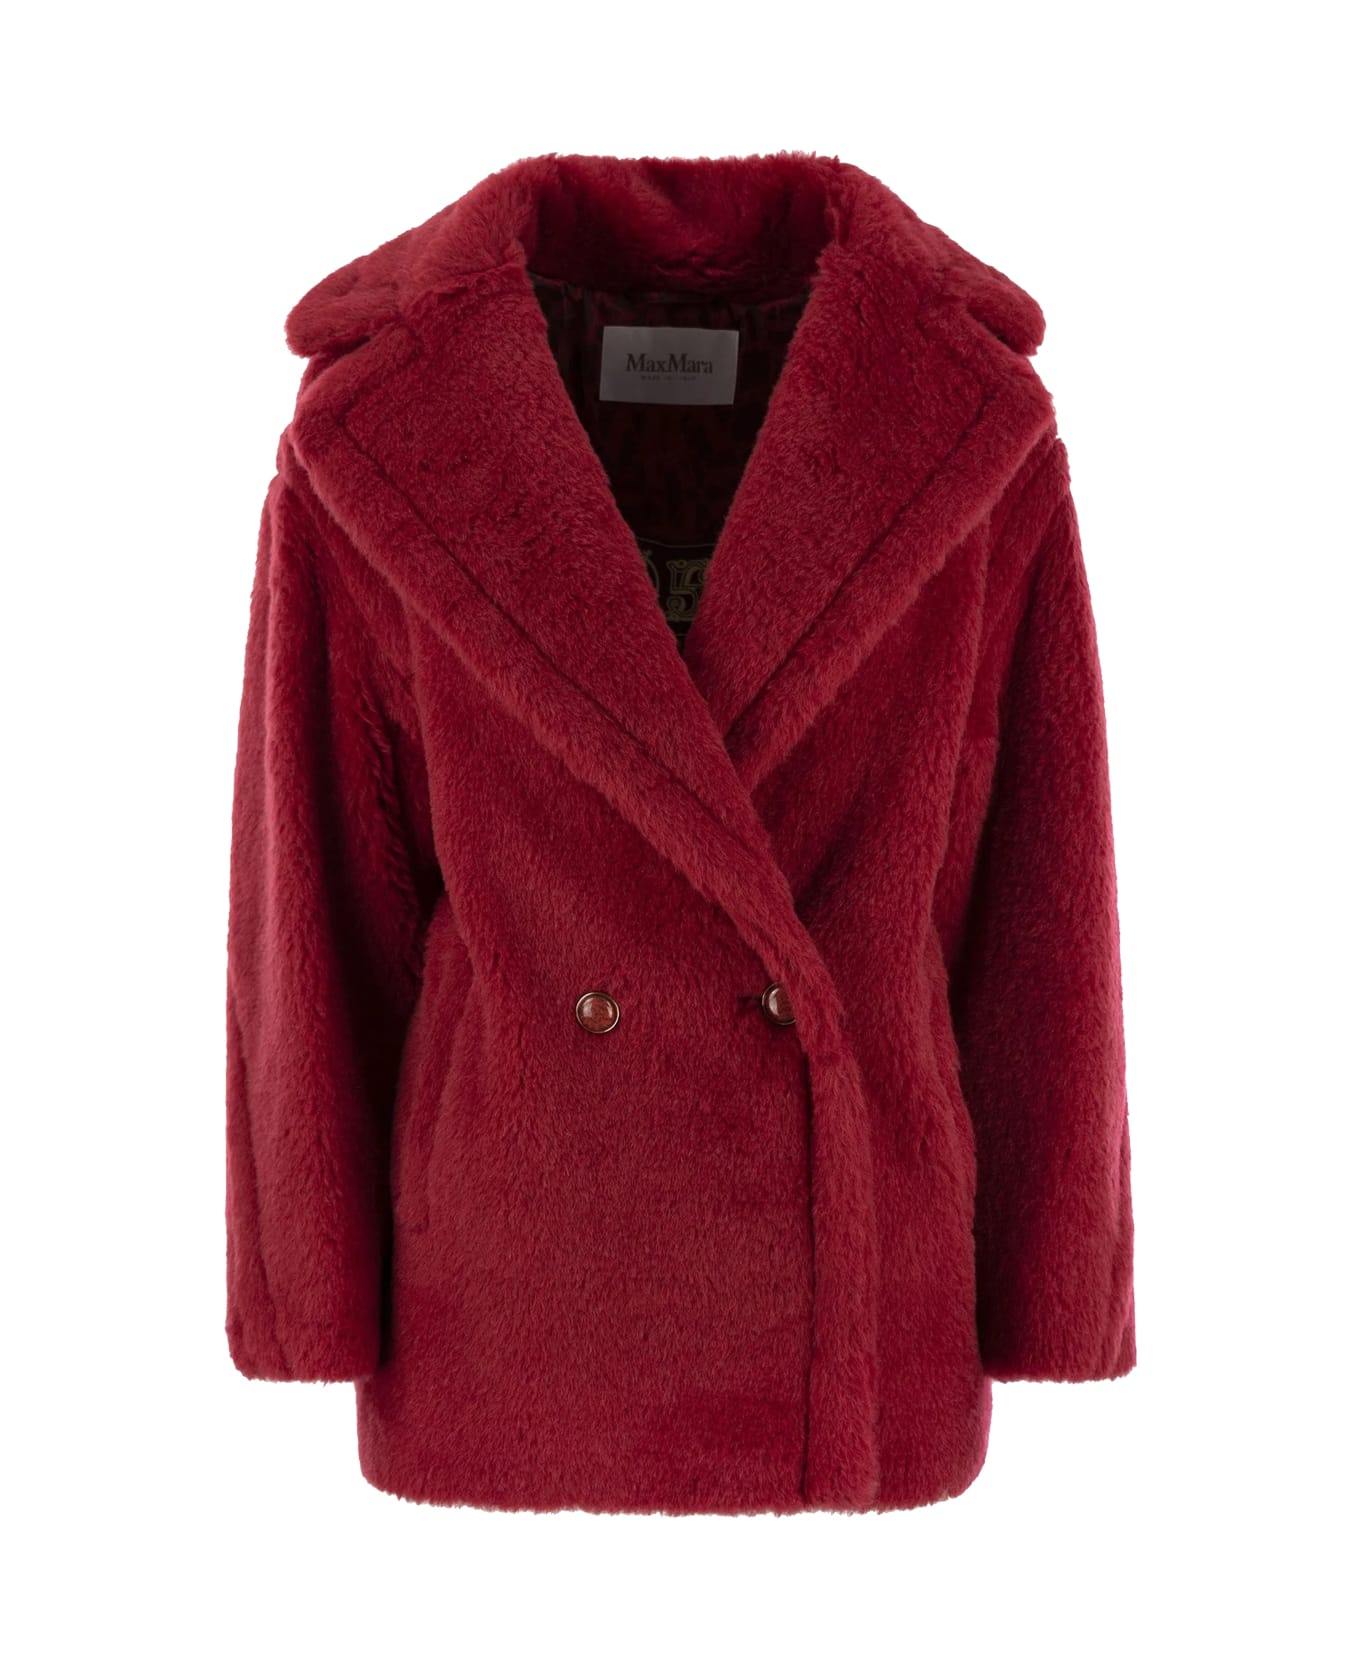 Max Mara Teddy Coat Frais - Red